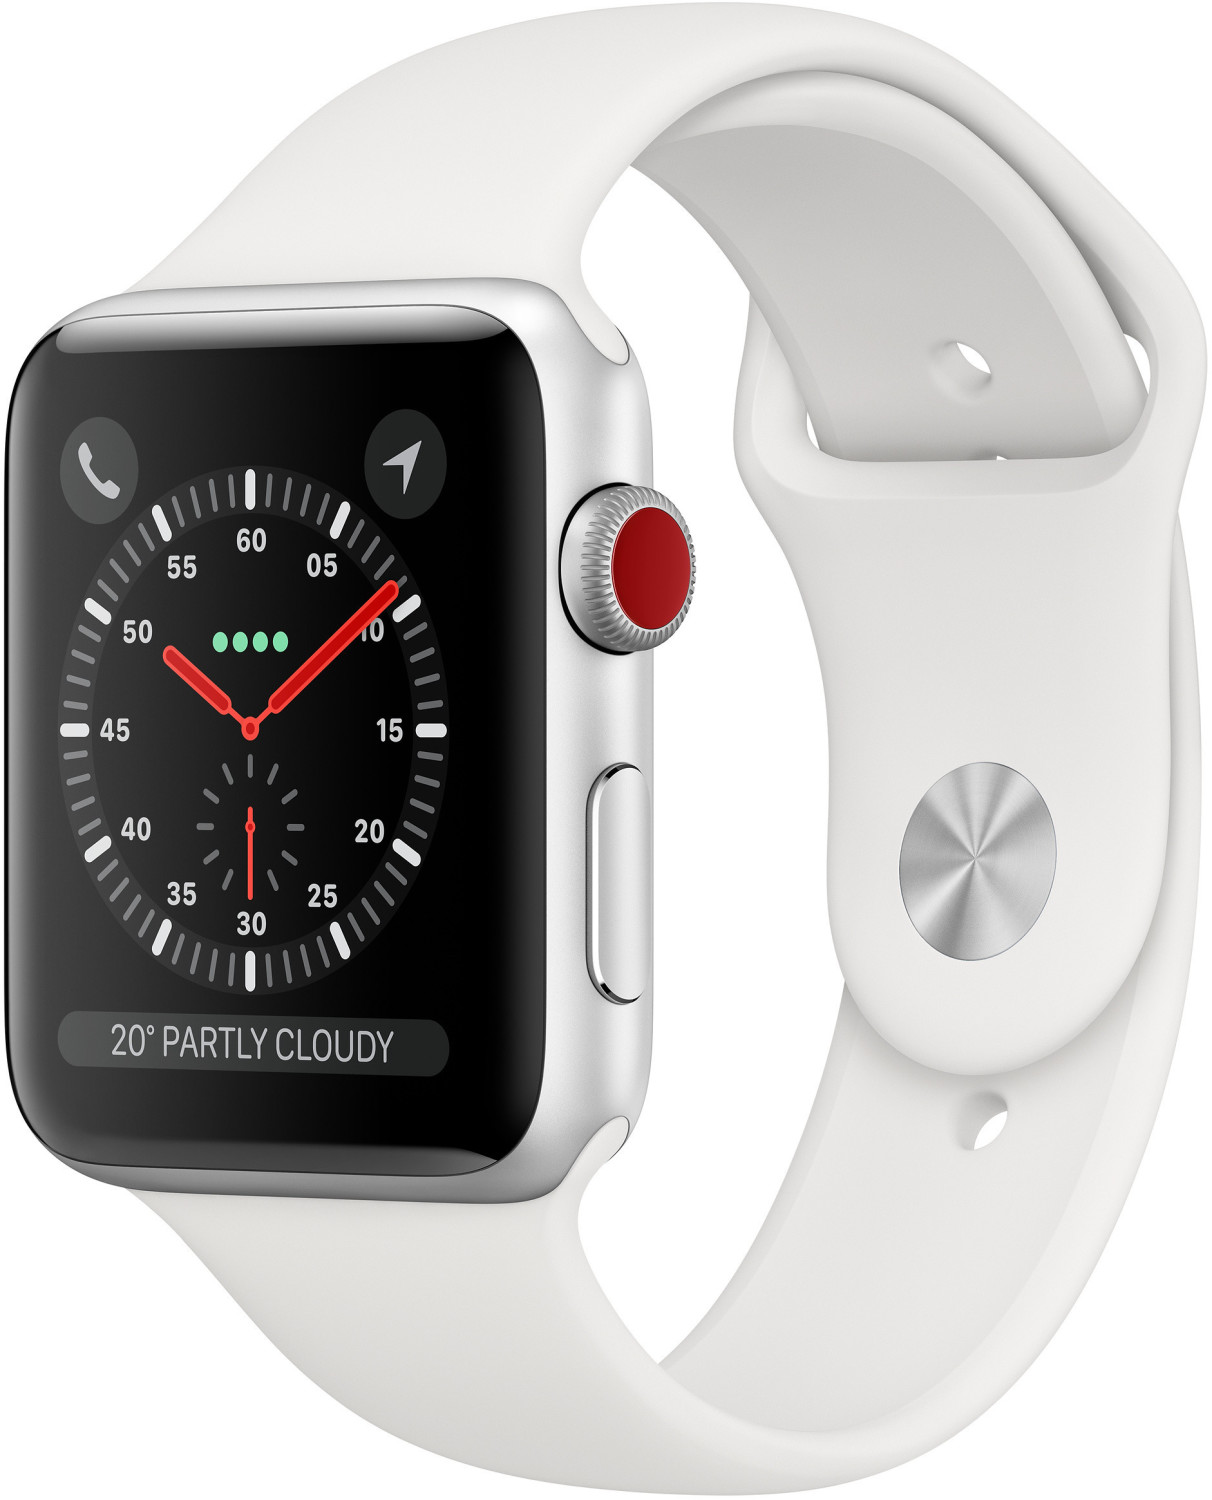 Apple Watch Series 3 42mm GPS + Cellular Aluminiumgehäuse silber mit Sportarmband weiß